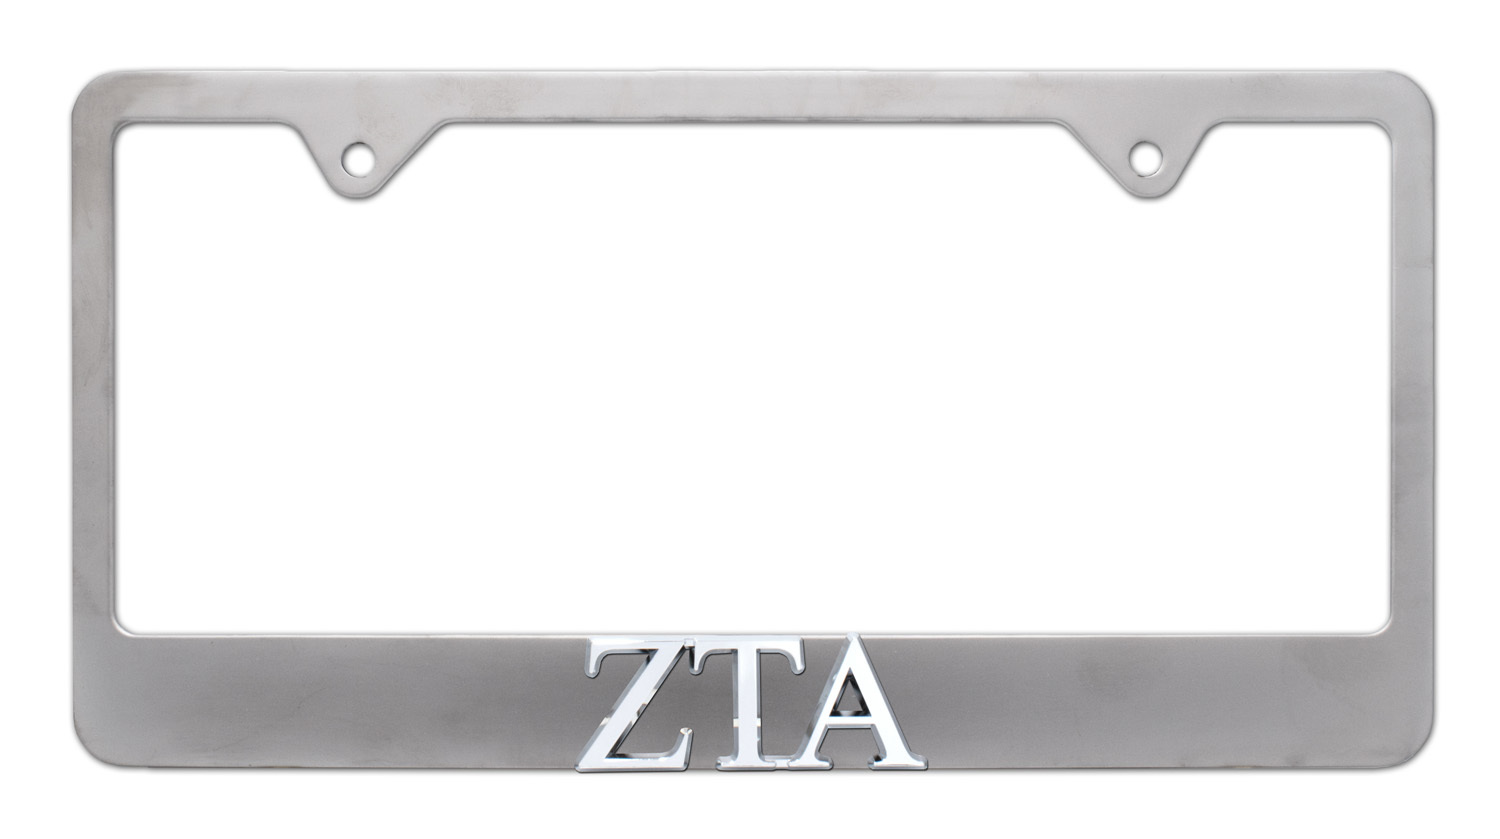 zeta tau alpha sorority chrome license plate frame made in usa